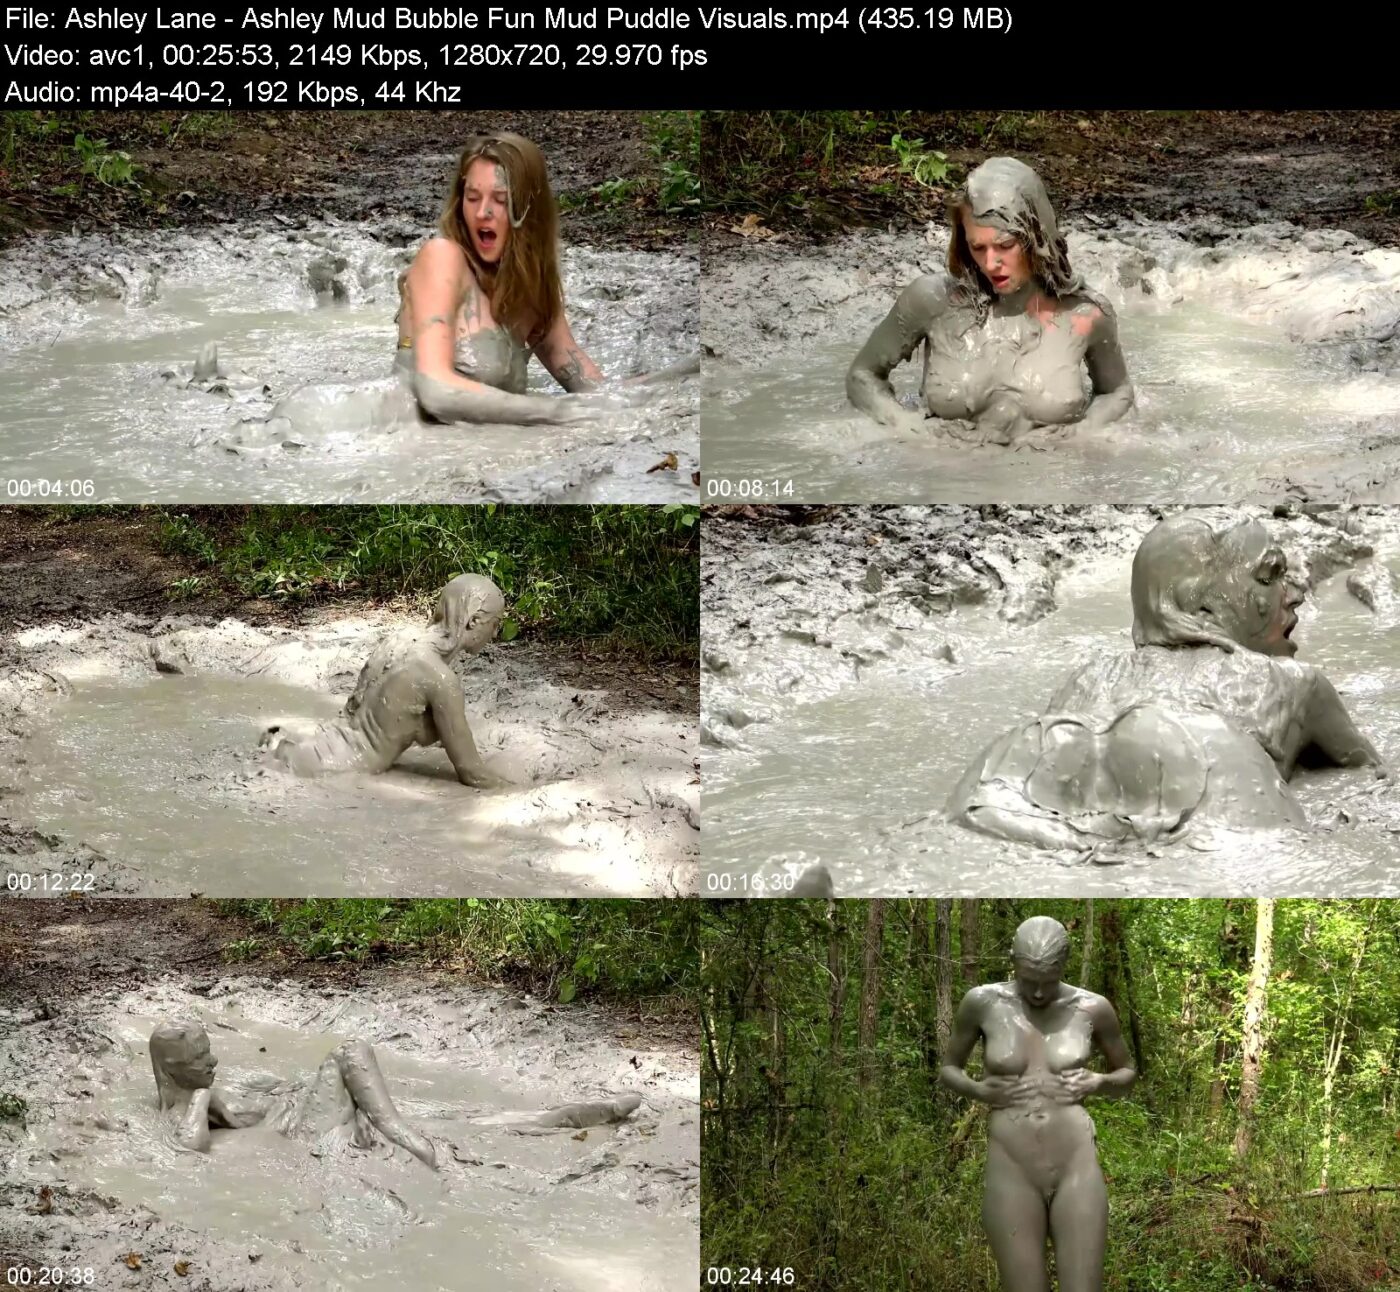 Ashley Lane - Ashley Mud Bubble Fun Mud Puddle Visuals